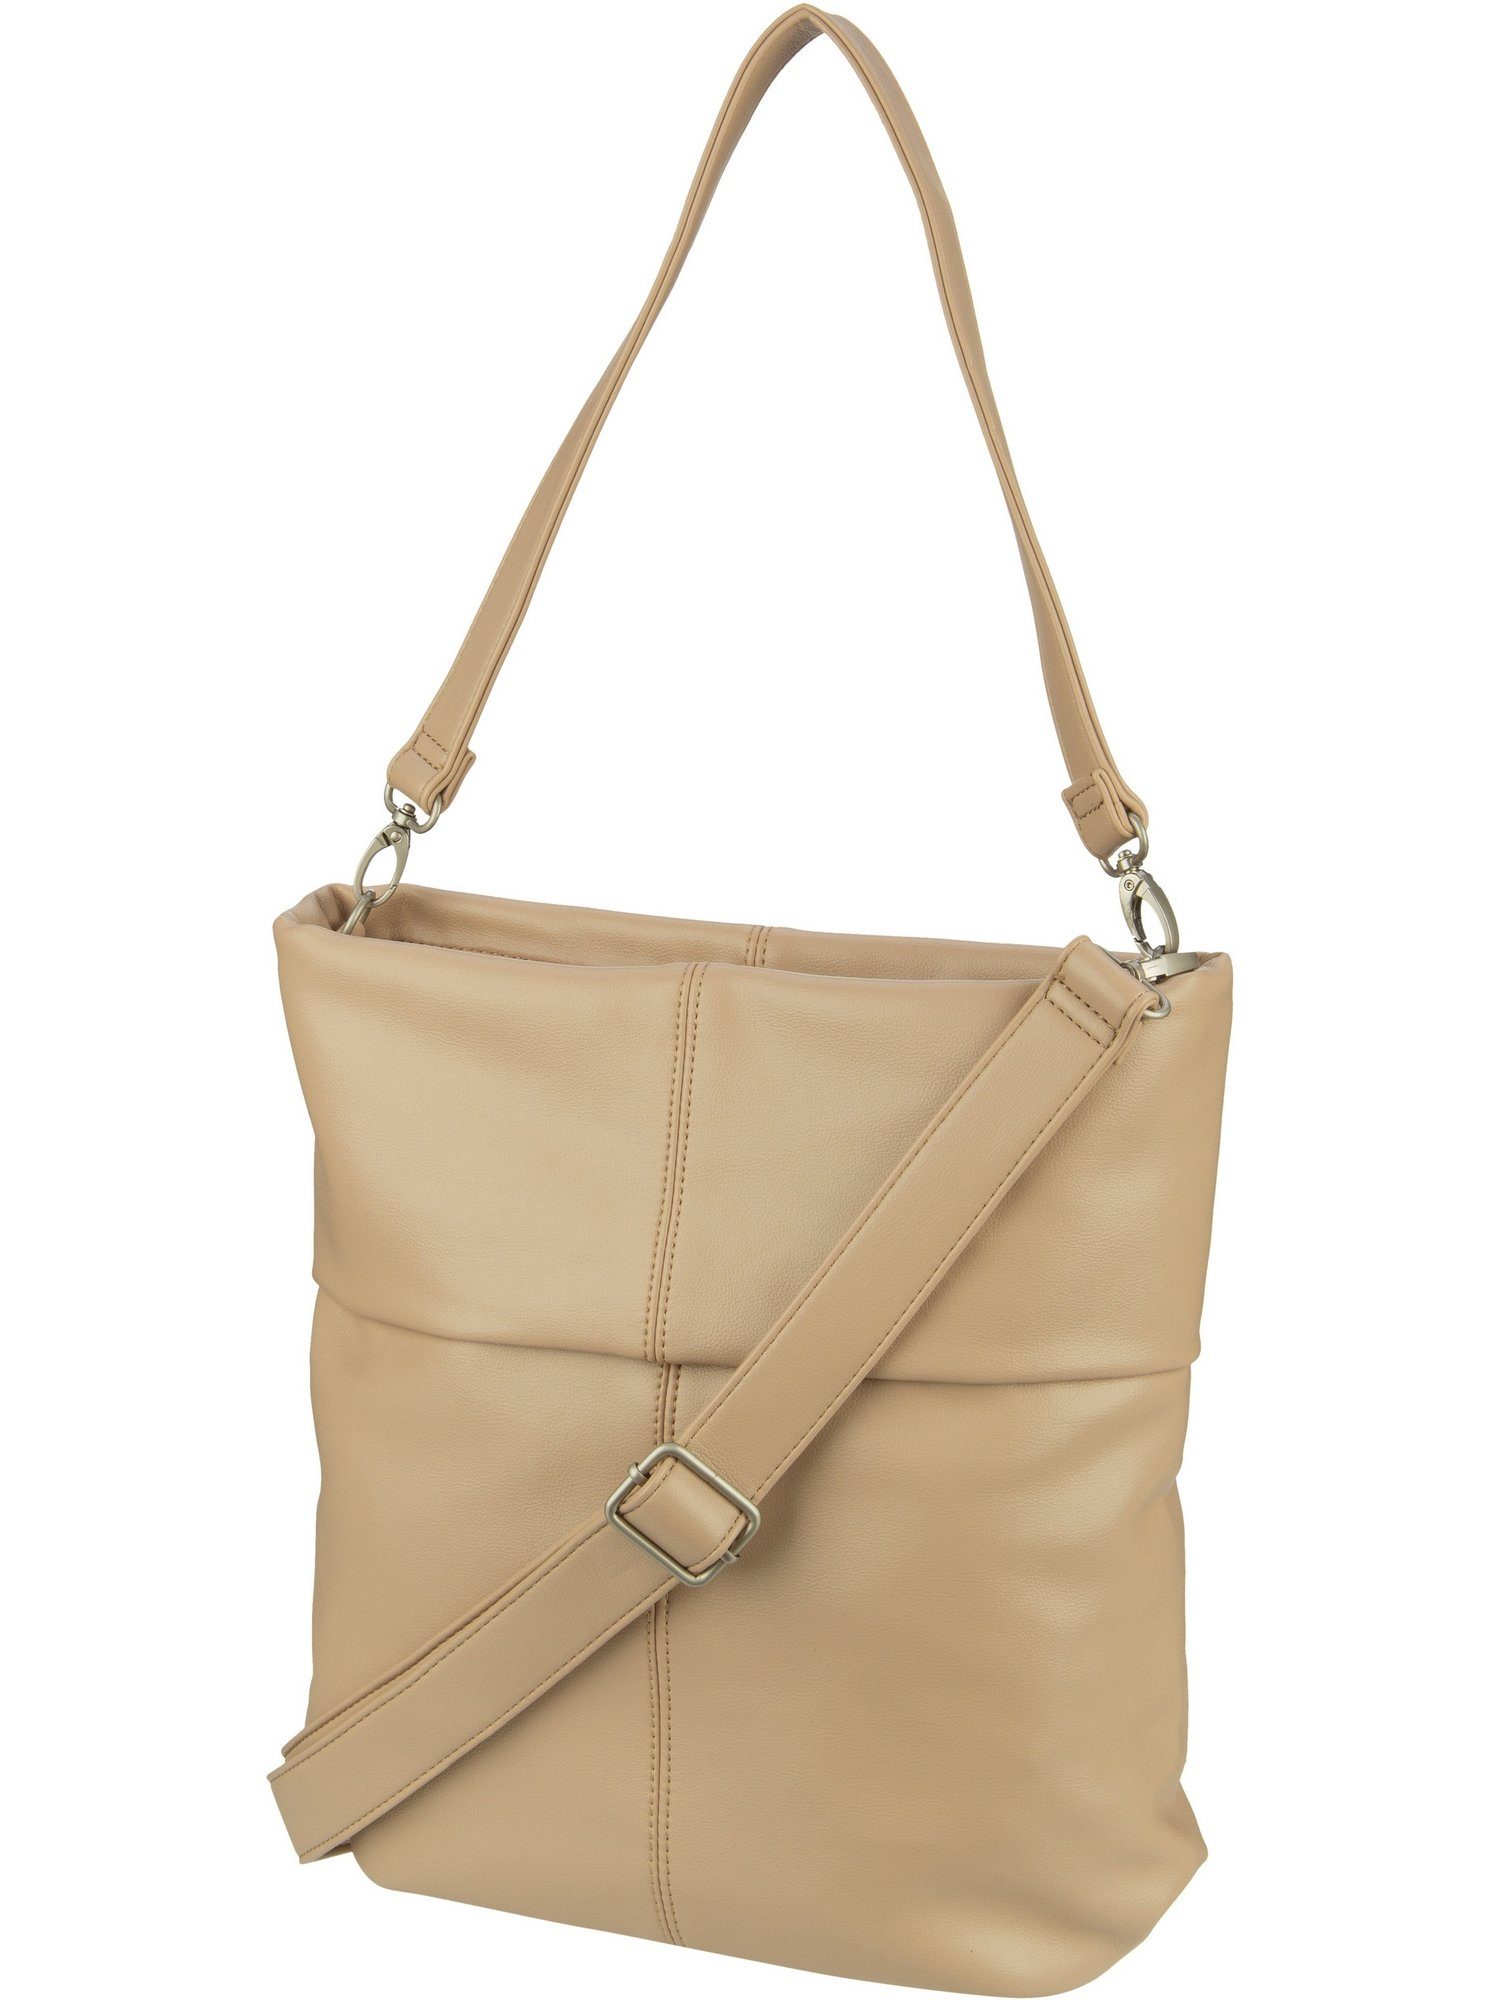 Zwei Handtasche Mademoiselle M12, Hobo Oat Bag